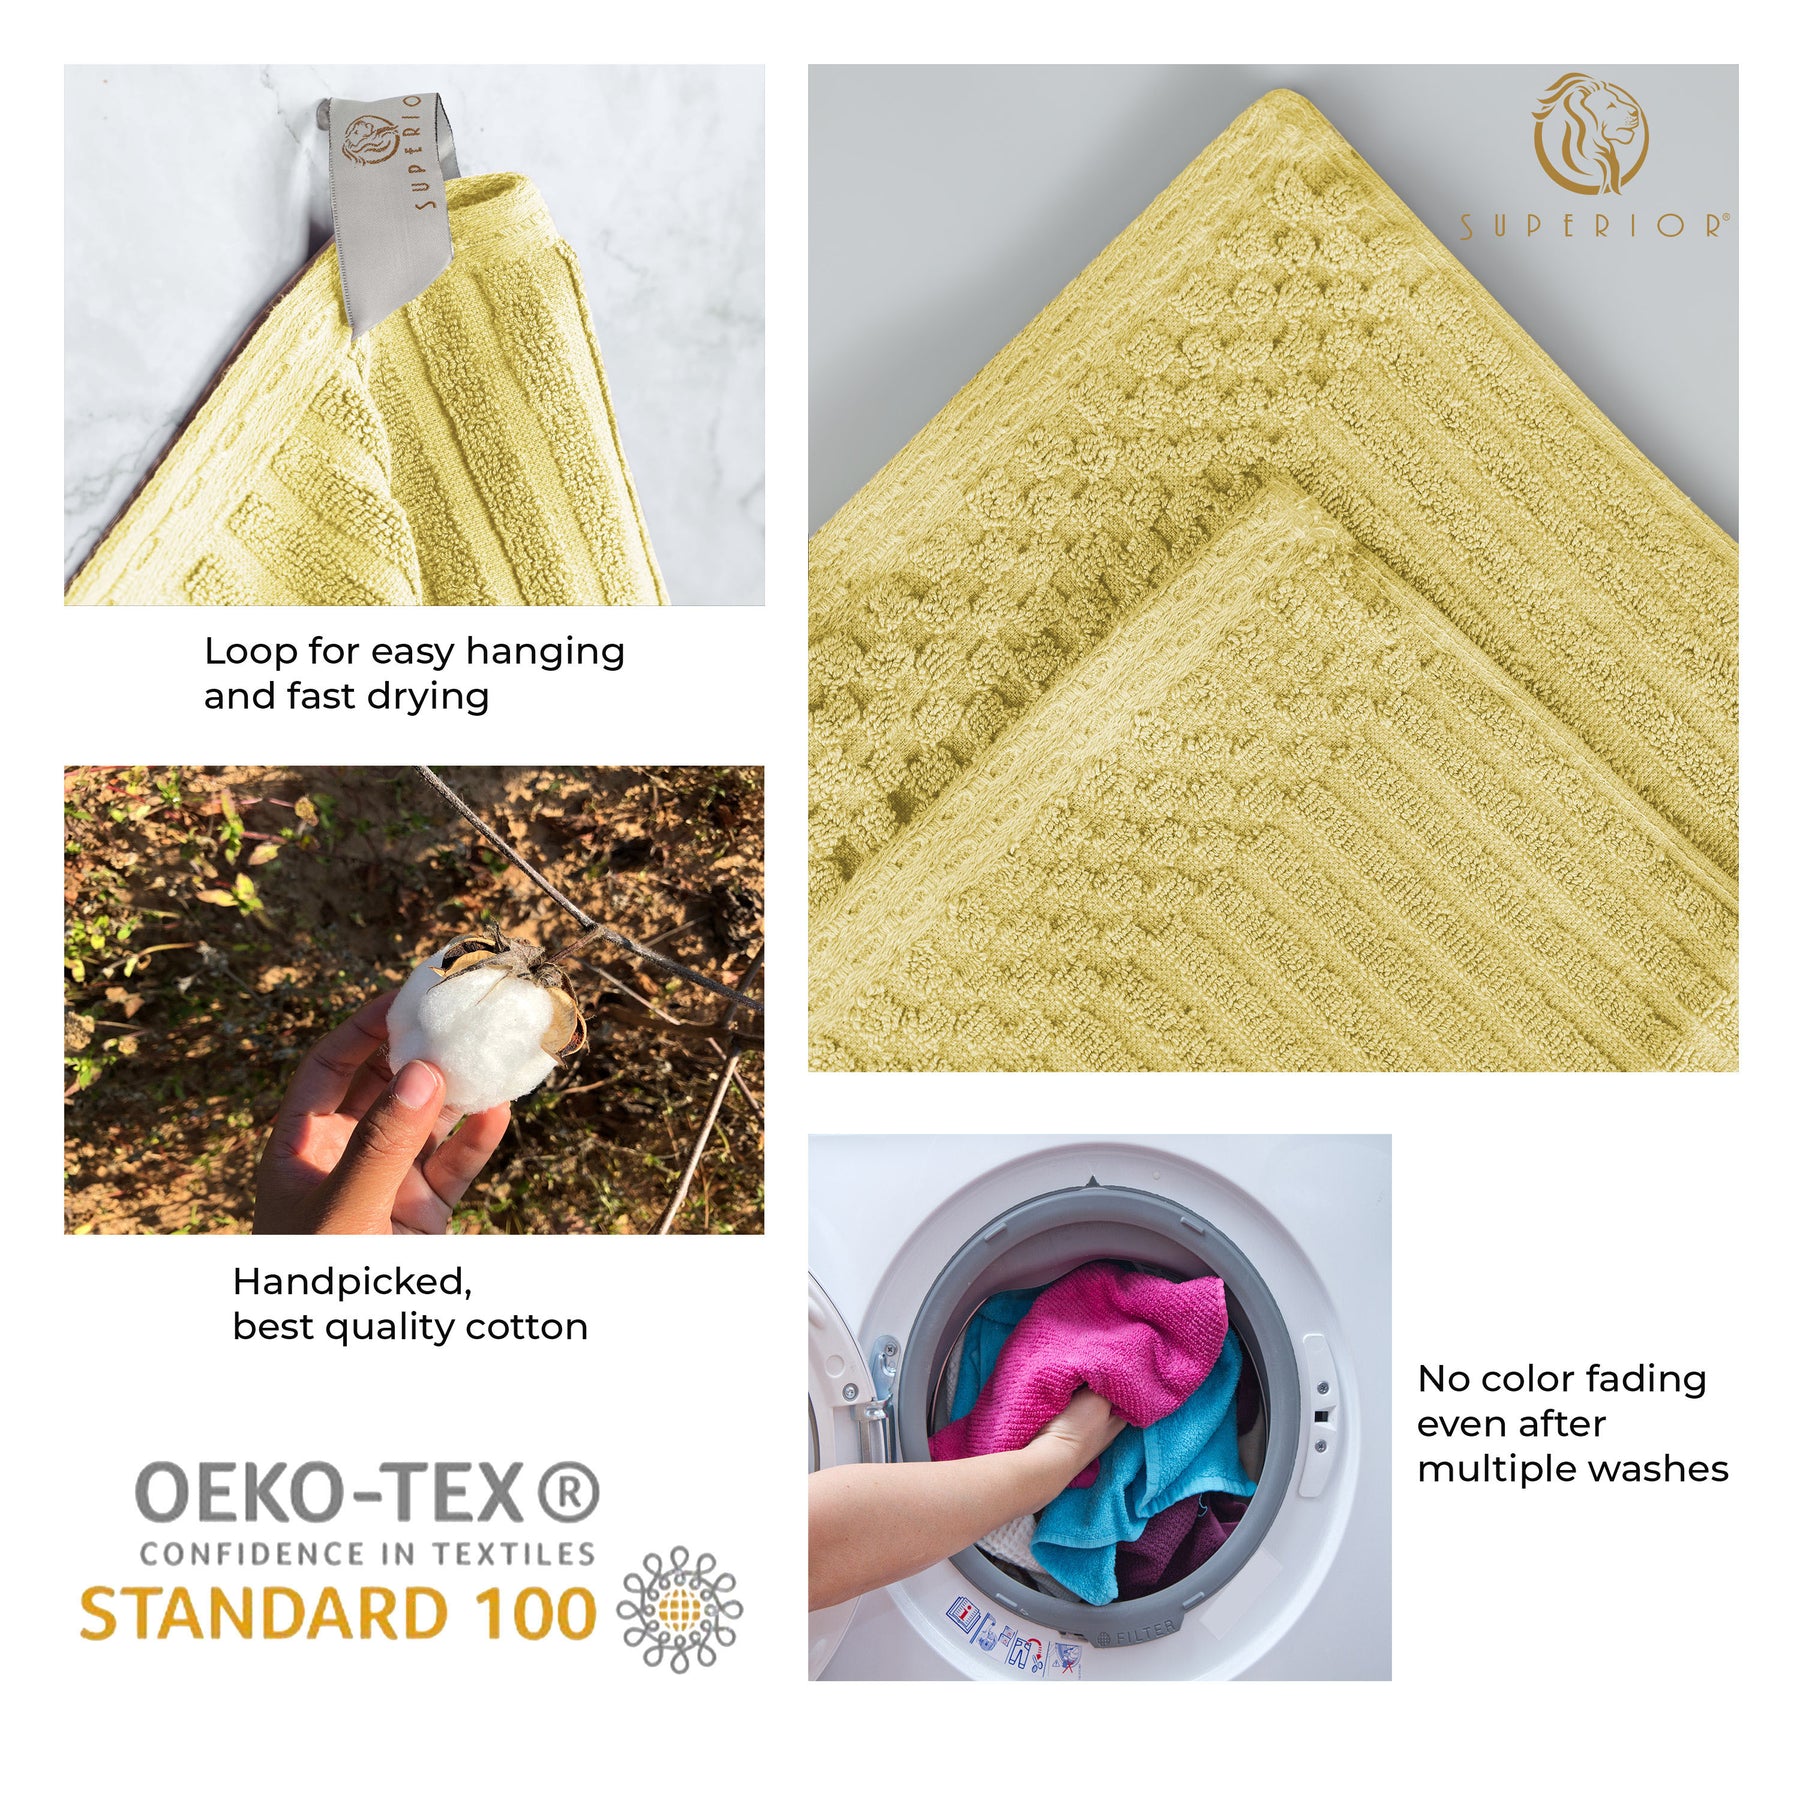 Superior Soho Ribbed Textured Cotton Ultra-Absorbent Bath Sheet & Bath Towel Set - Golden Mist